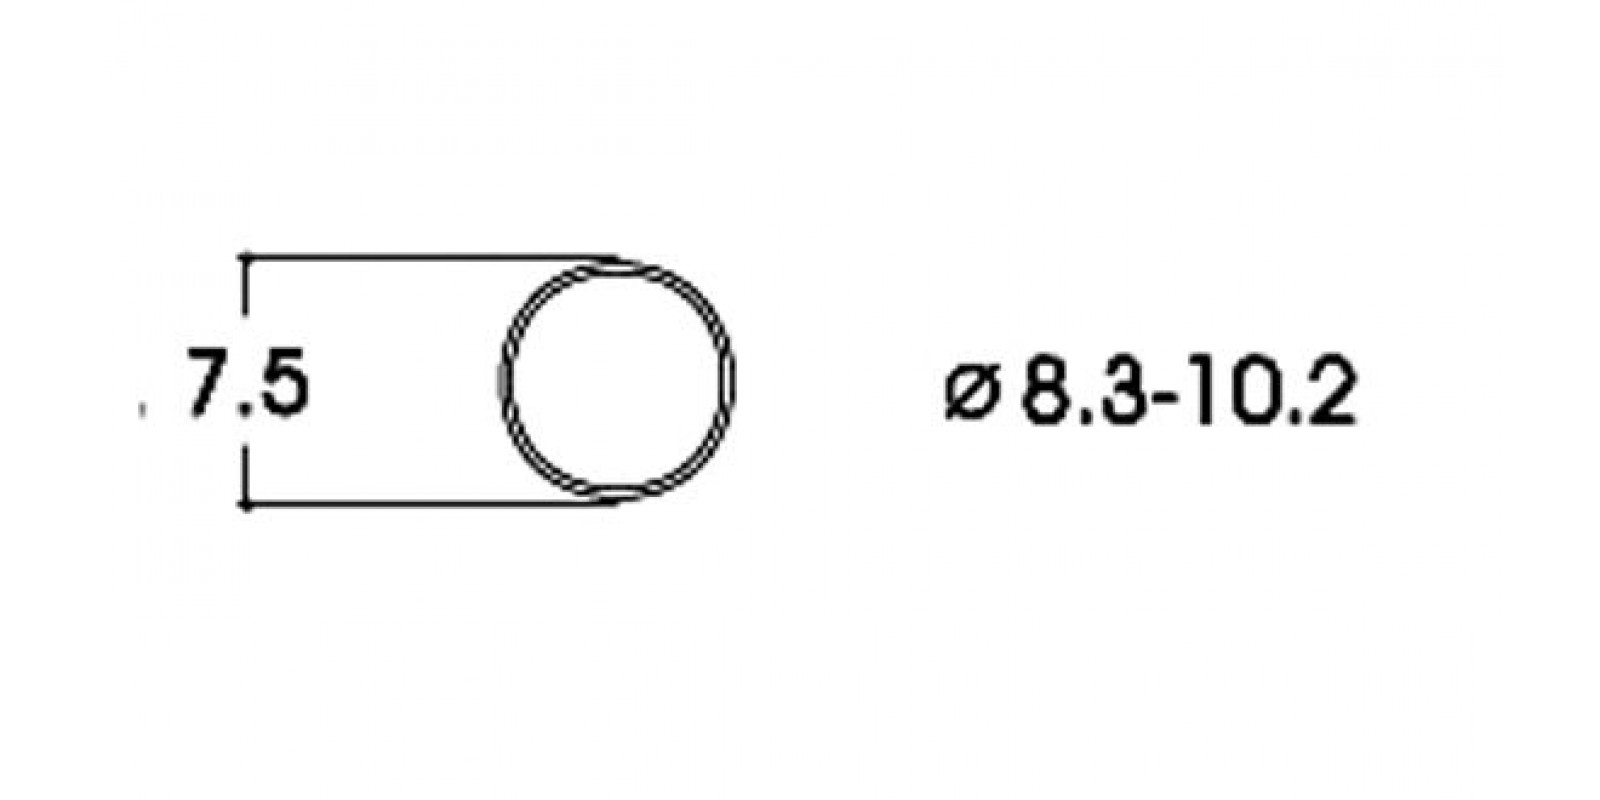 RO40068 - Adhesive ring set, 8.3-10.2 mm